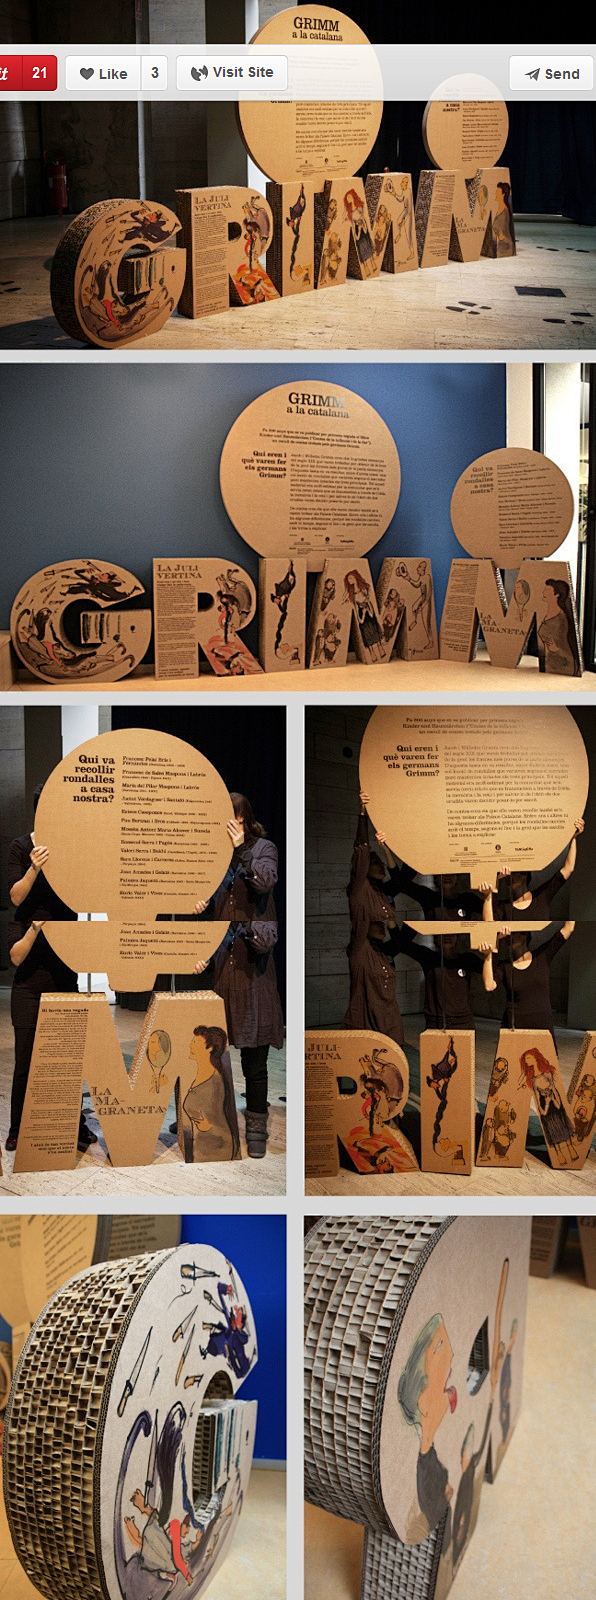 Grimm by Núria Farré...